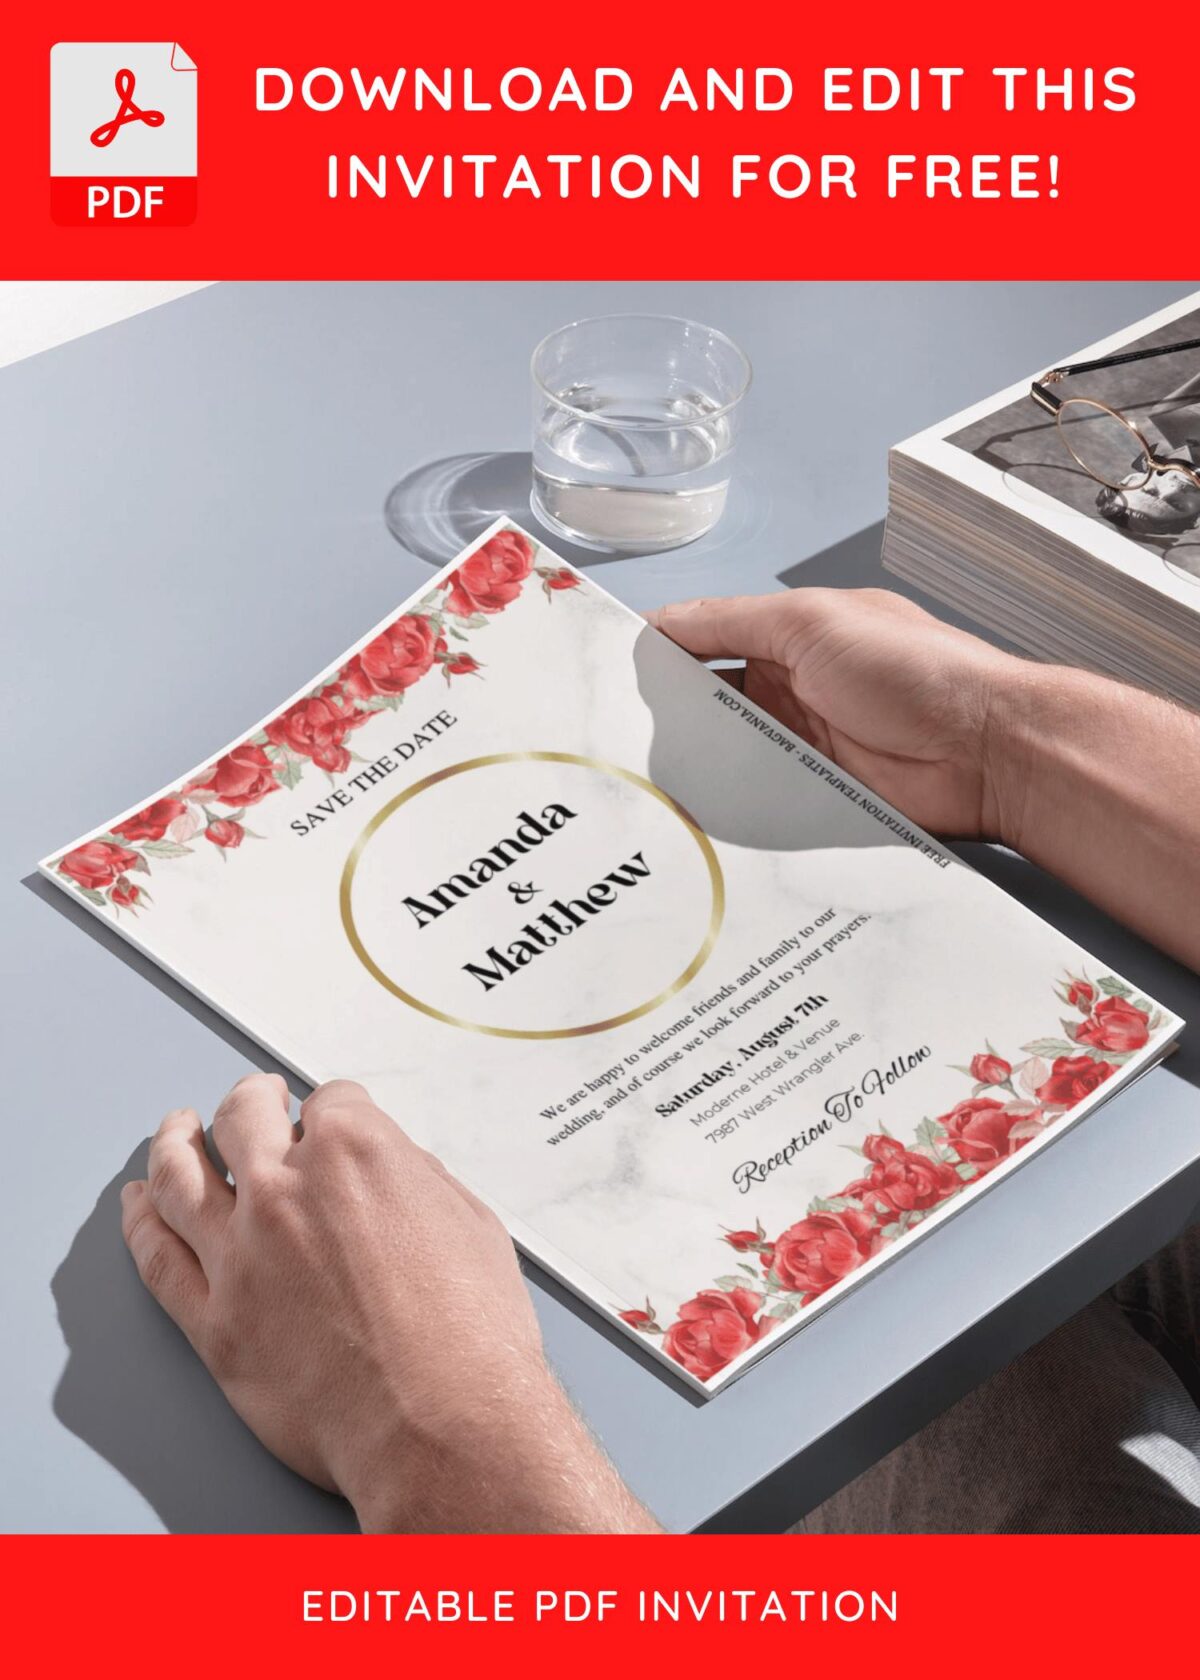 (Free Editable PDF) Whimsical Rosebud Wedding Invitation Templates H